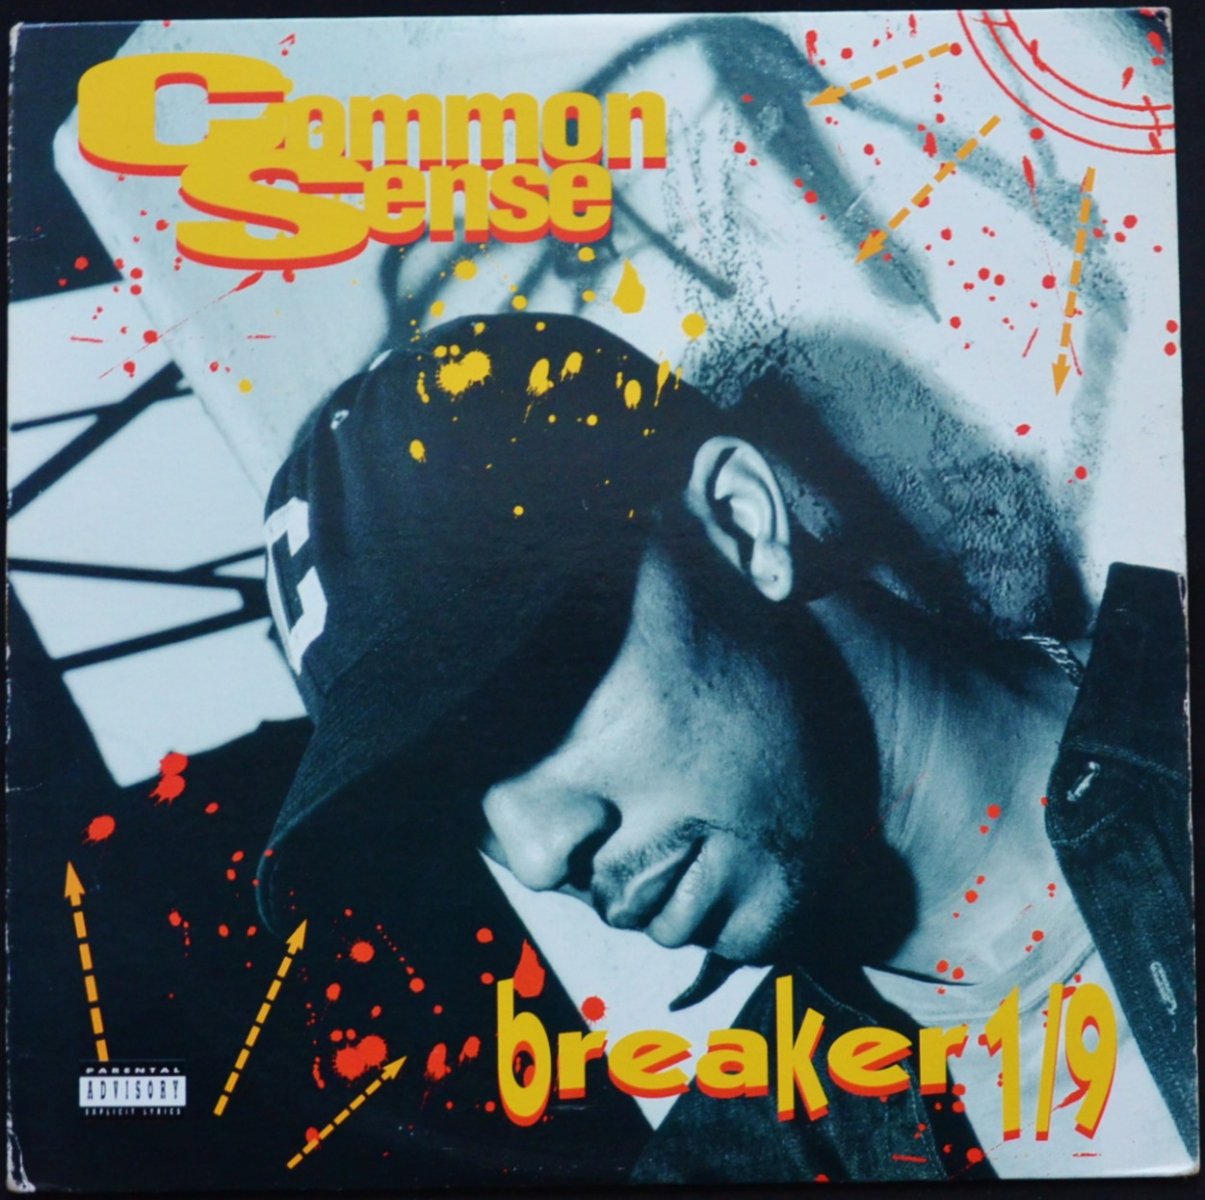 COMMON SENSE / BREAKER 1/9 (12